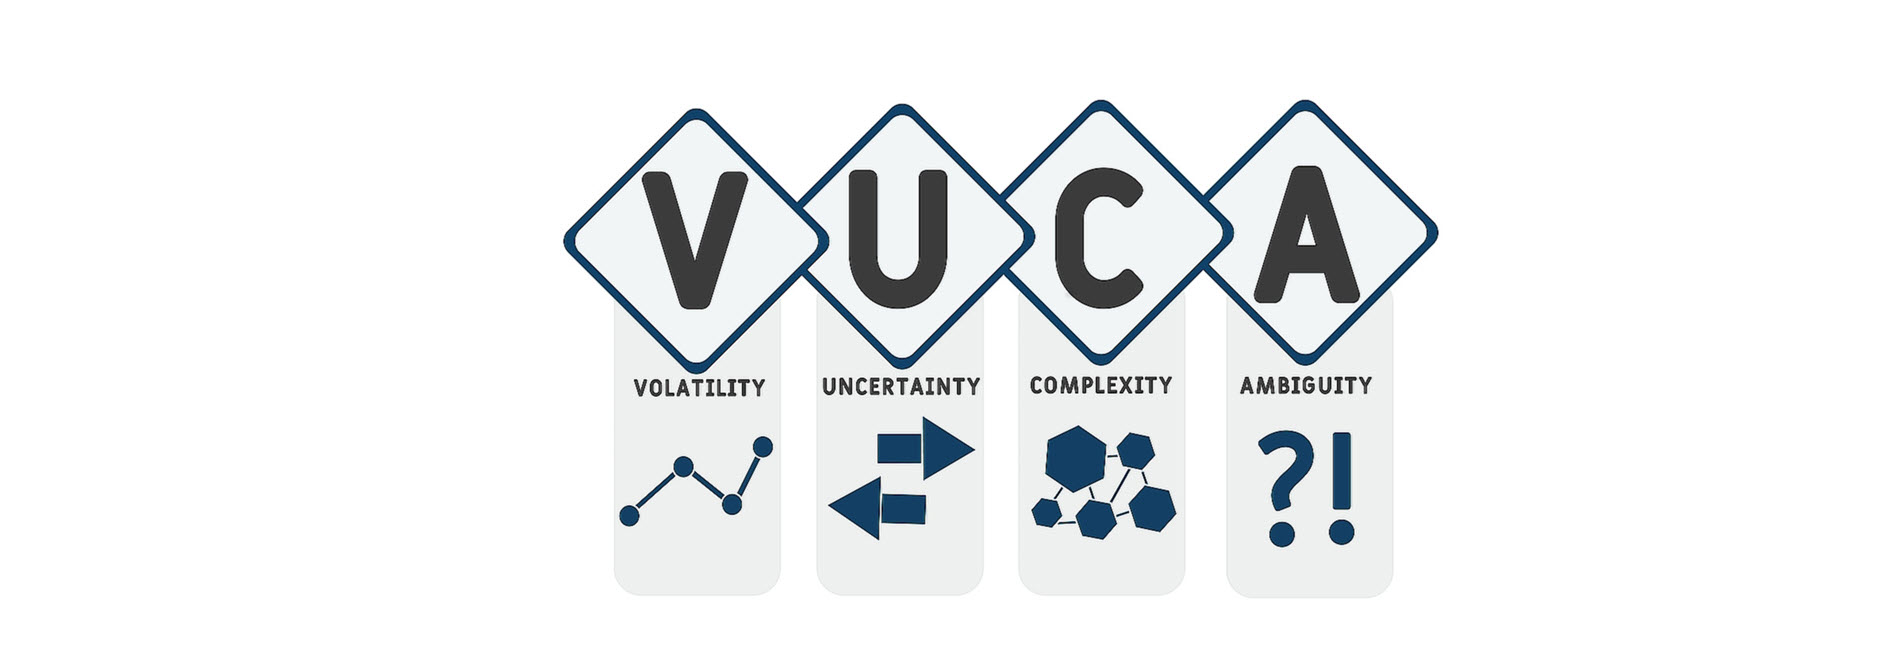 Vuca_Shutterstock_Richtig_skaliert